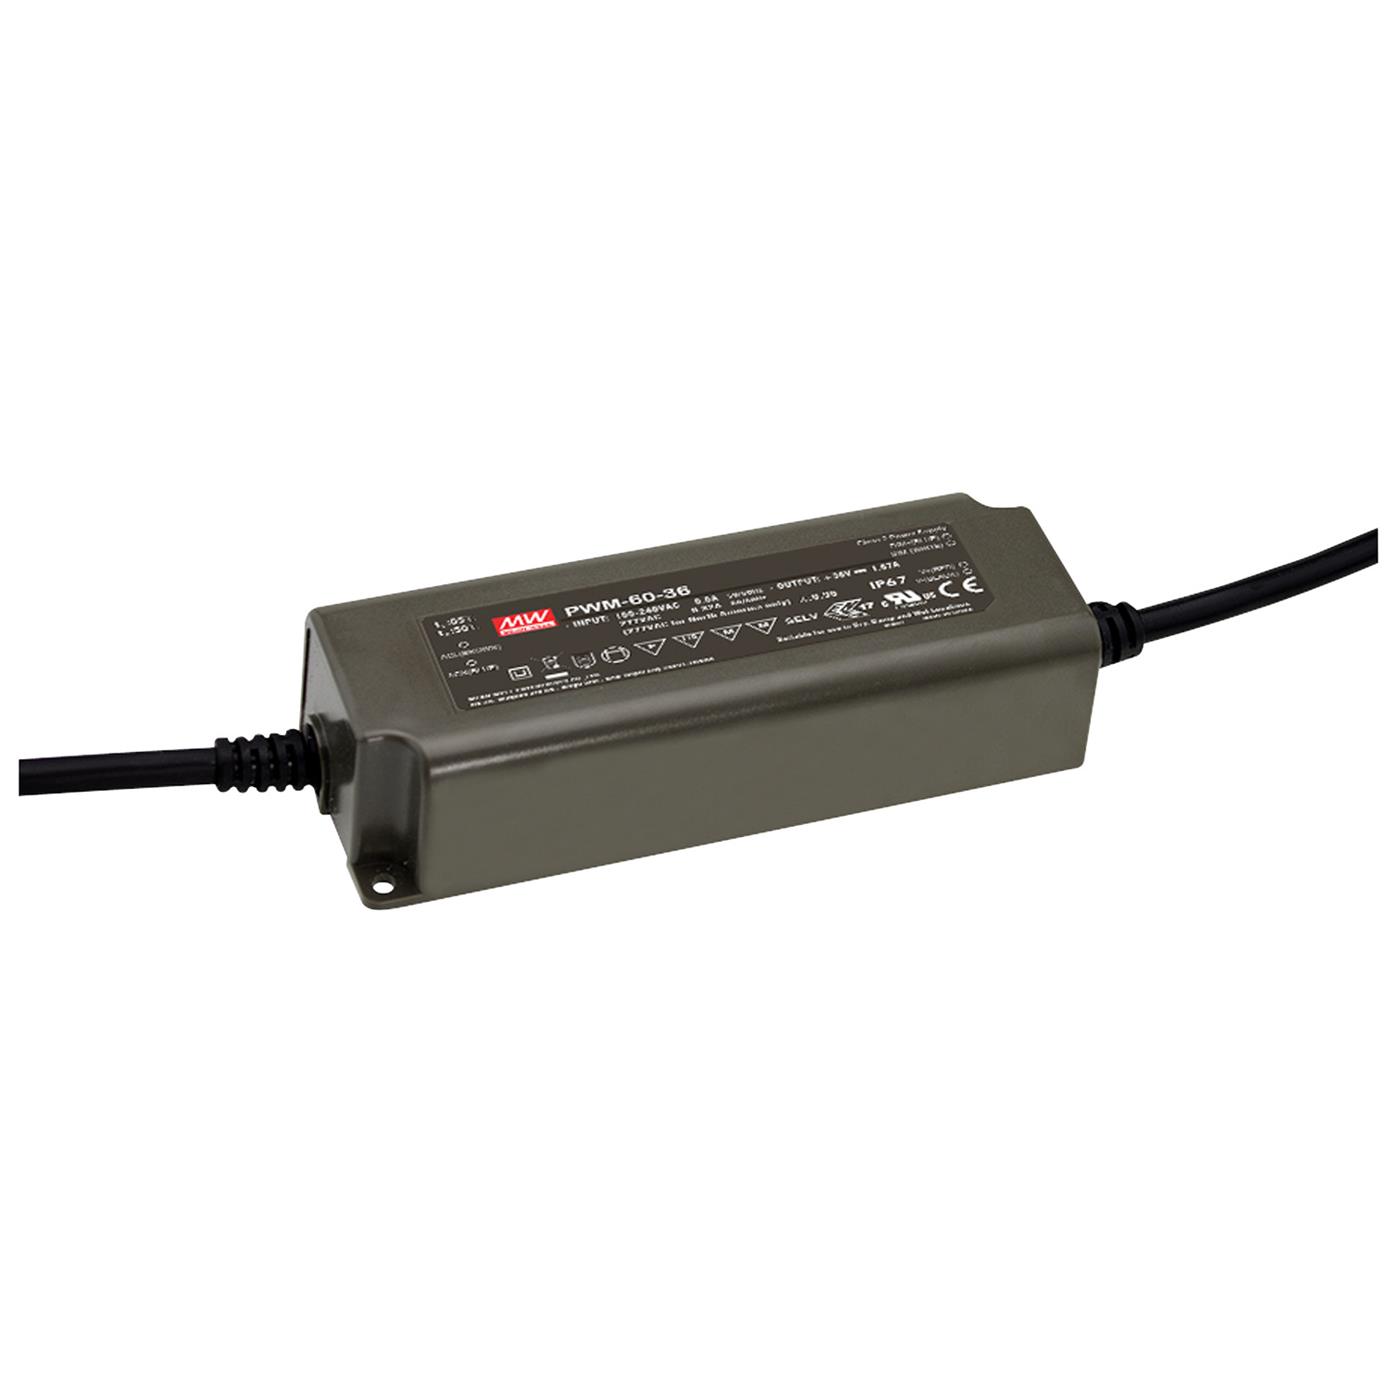 PWM-60-24 60W 24V 2,5A LED Netzteil Trafo Treiber IP65 Dimmbar 0-10V PWM